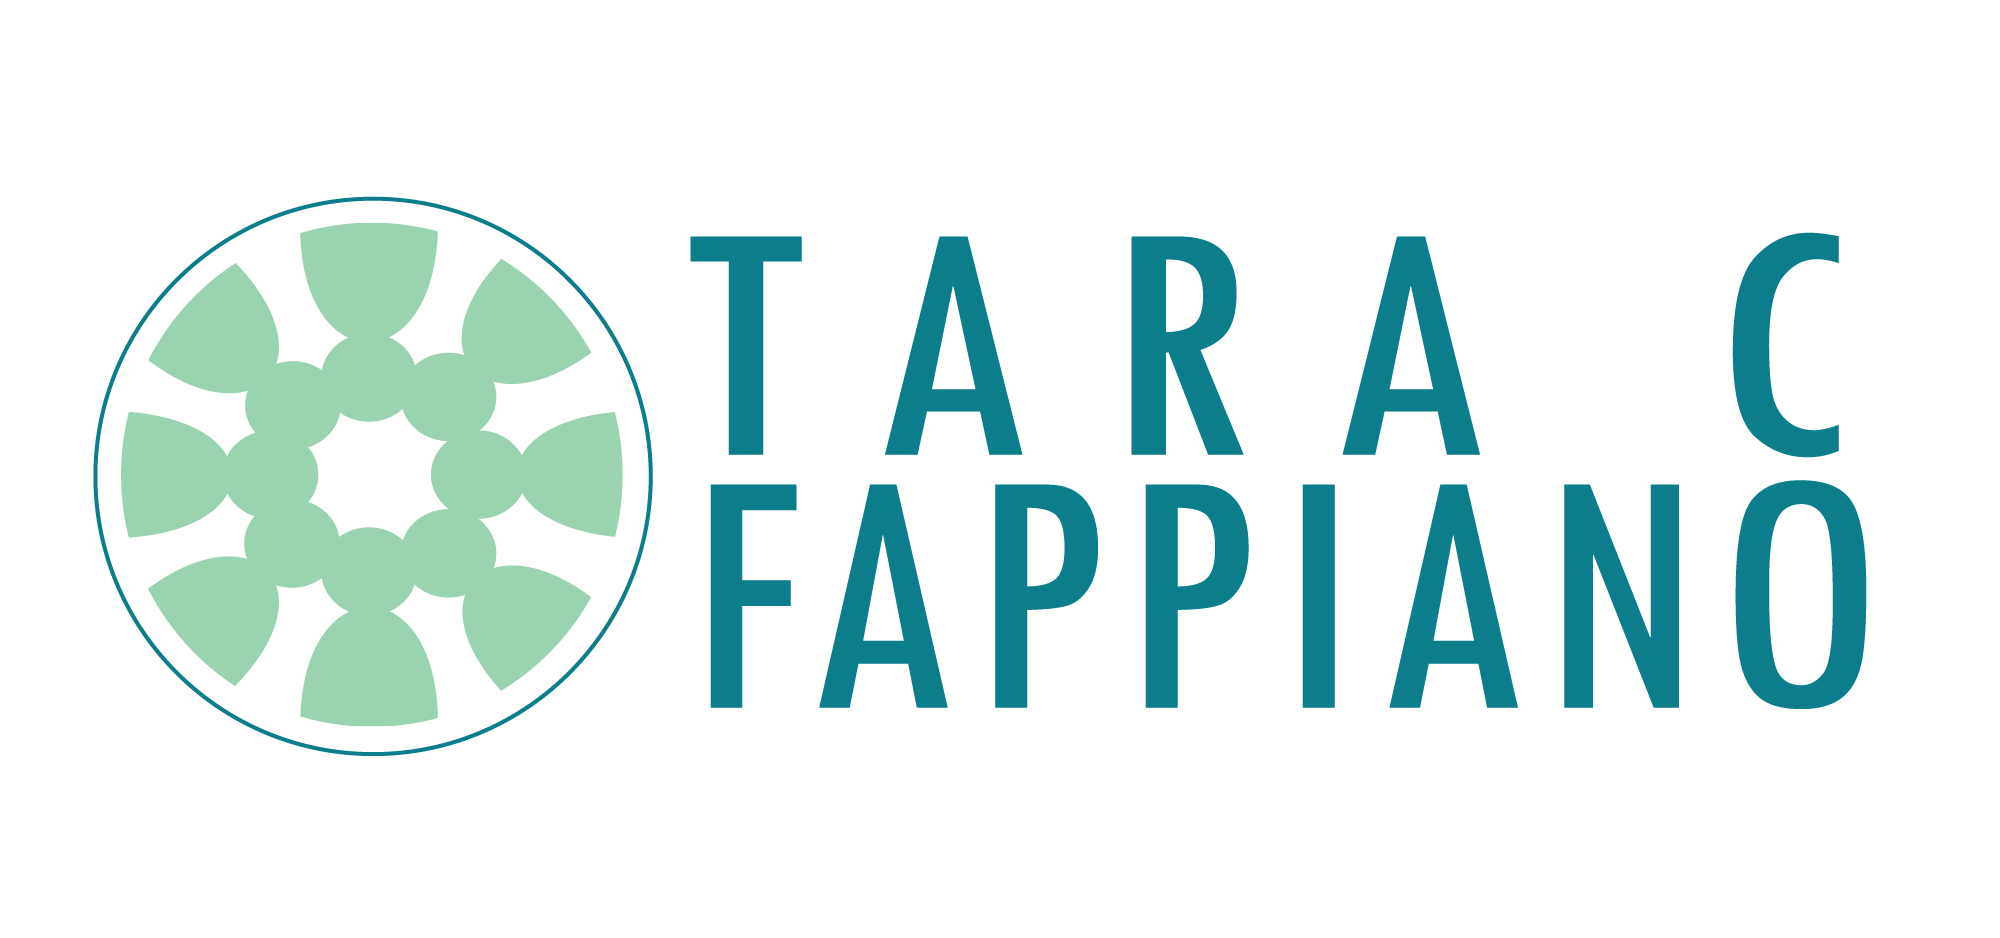 Tara C. Fappiano